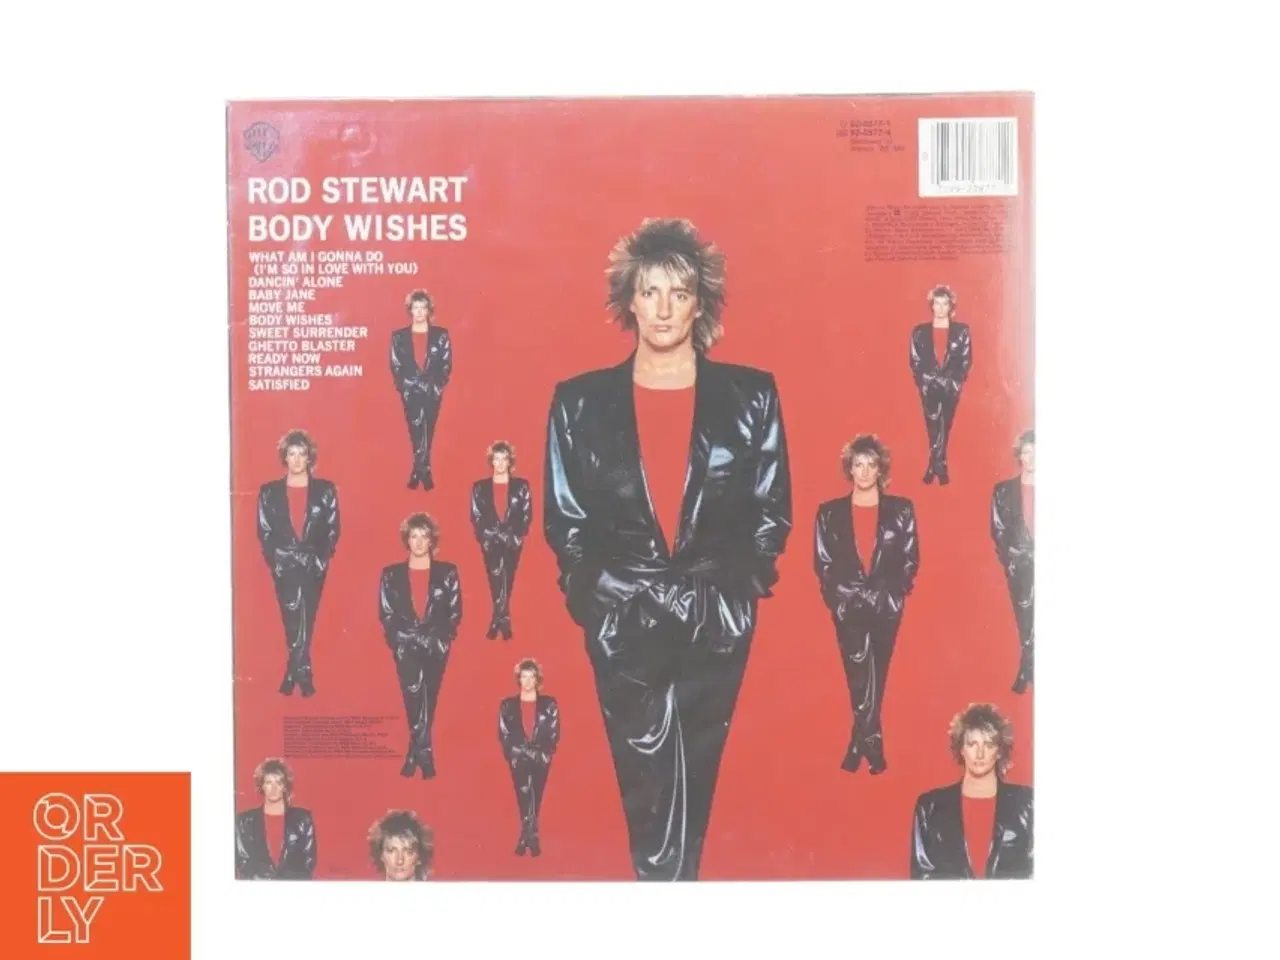 Billede 2 - Vinylplade Rod Stewart body wishes fra Warner Brothers (str. 30 cm)